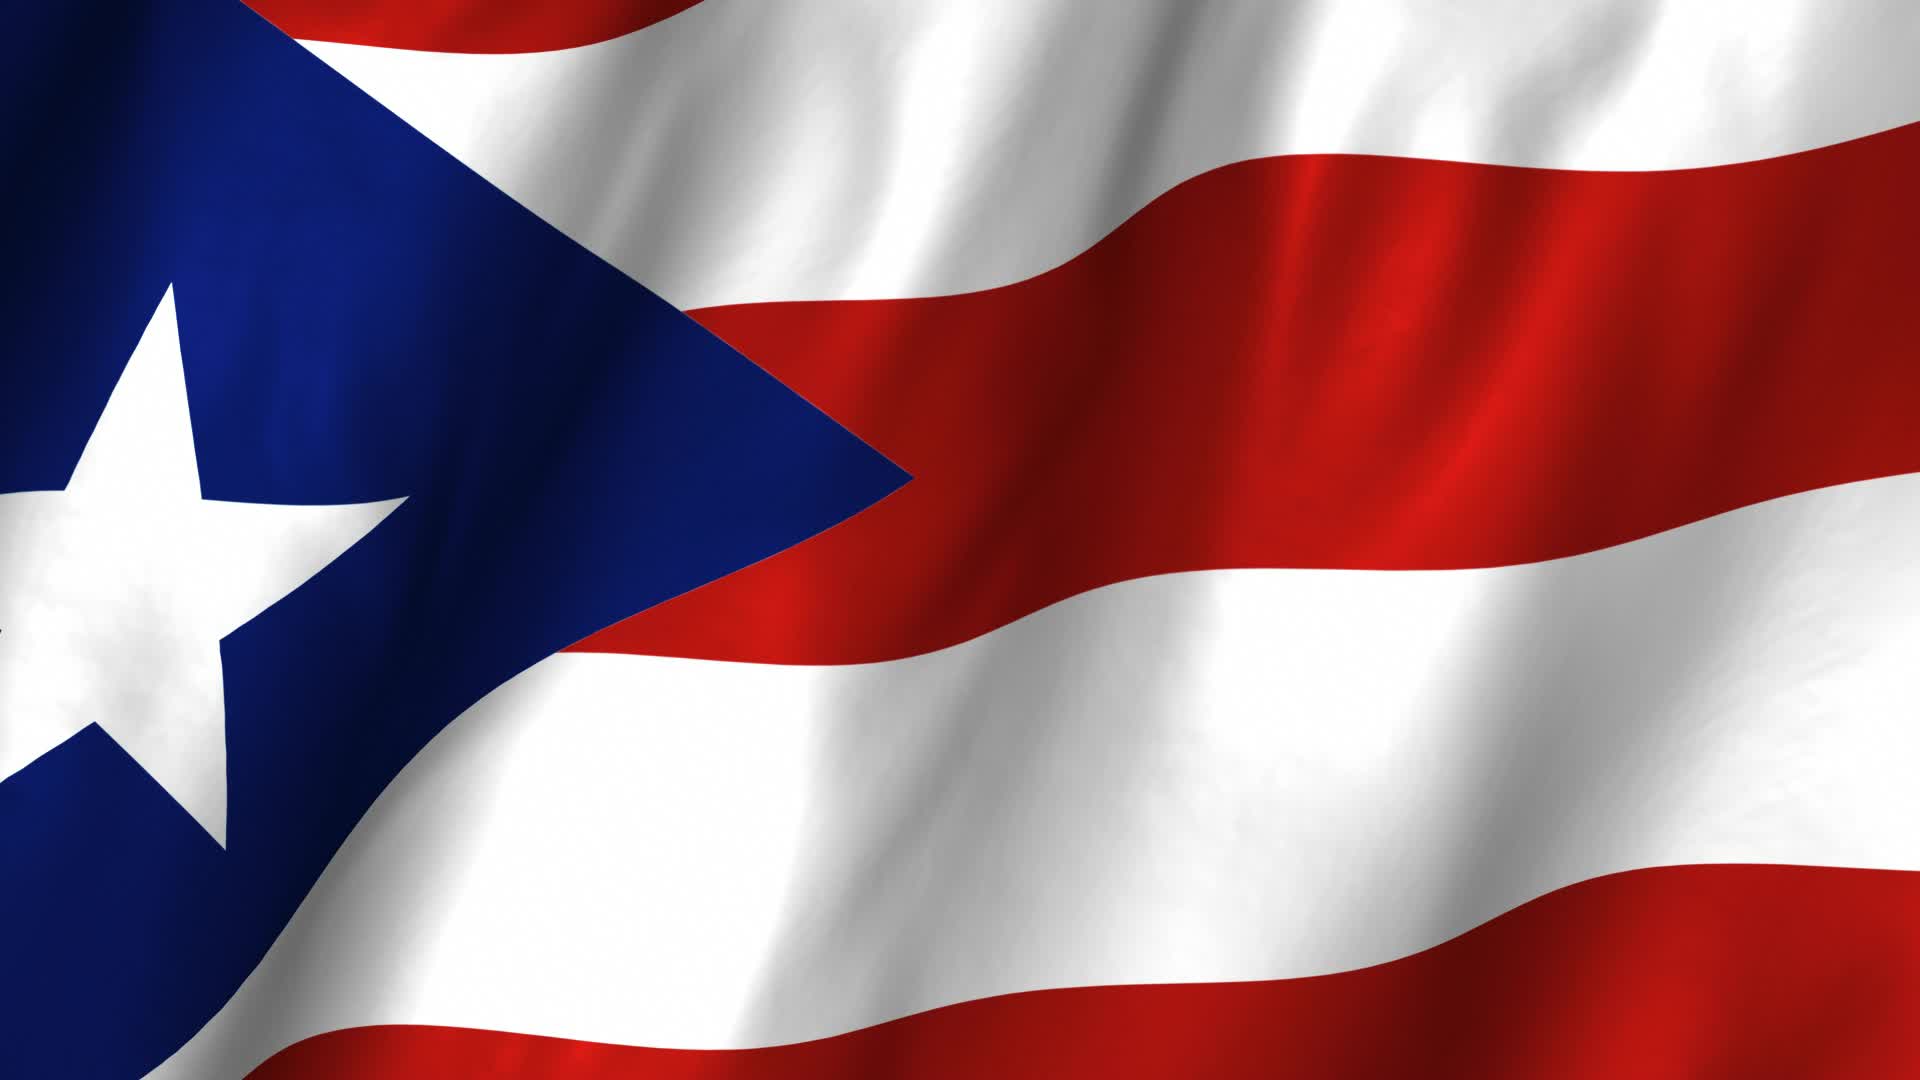 Puerto Rican Flag Wallpaper Rico Waving